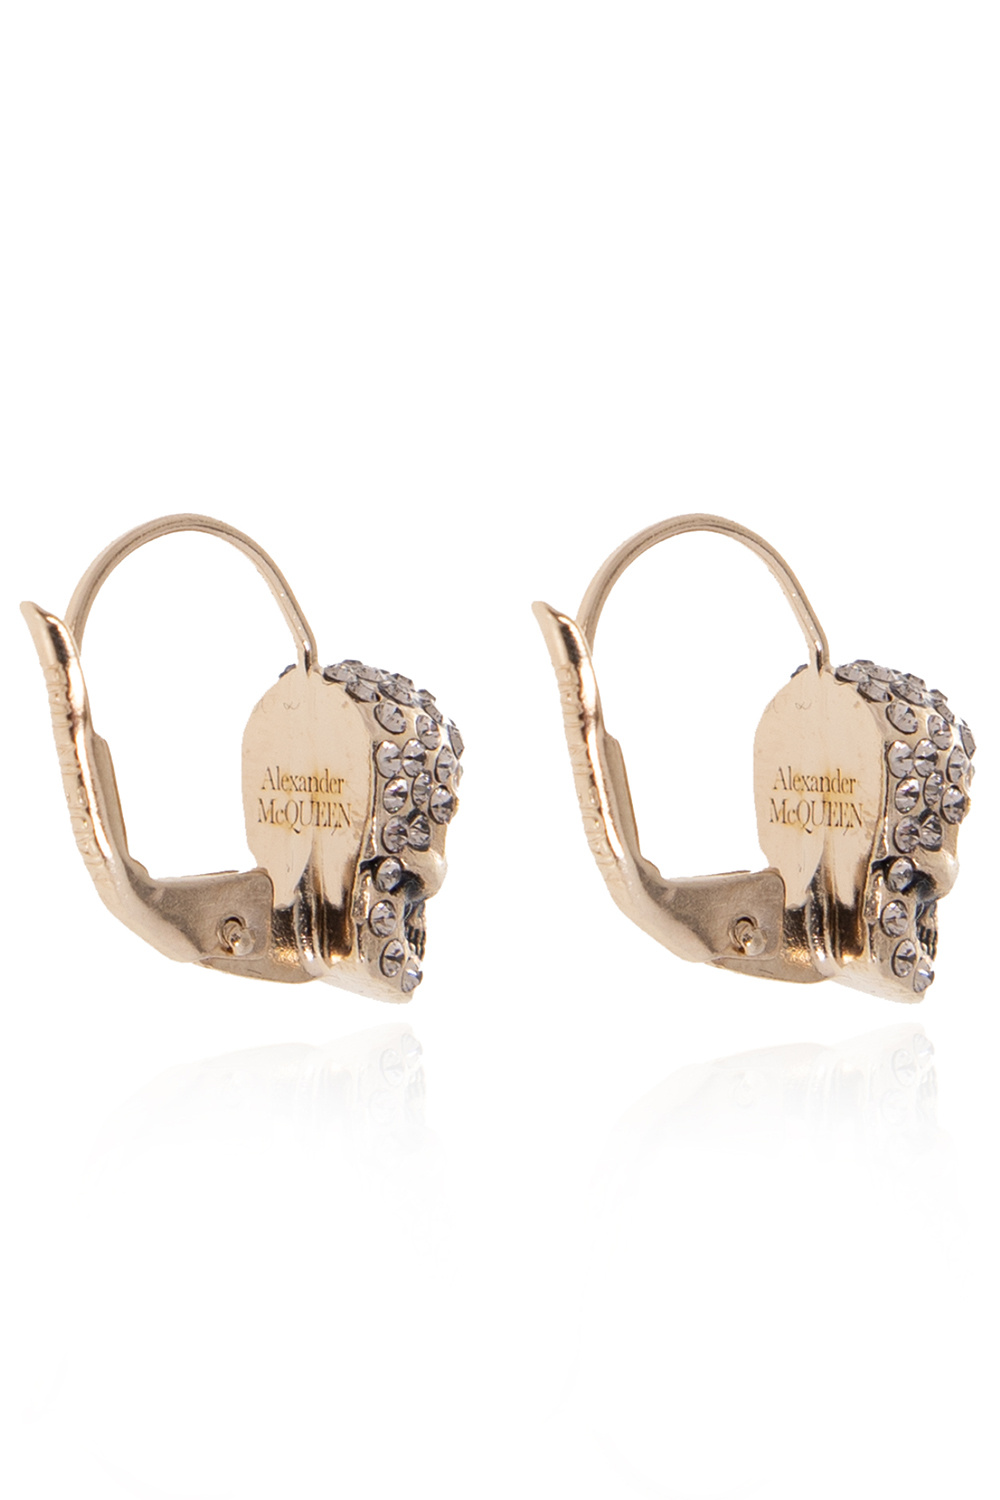 Alexander McQueen Skull-shaped earrings